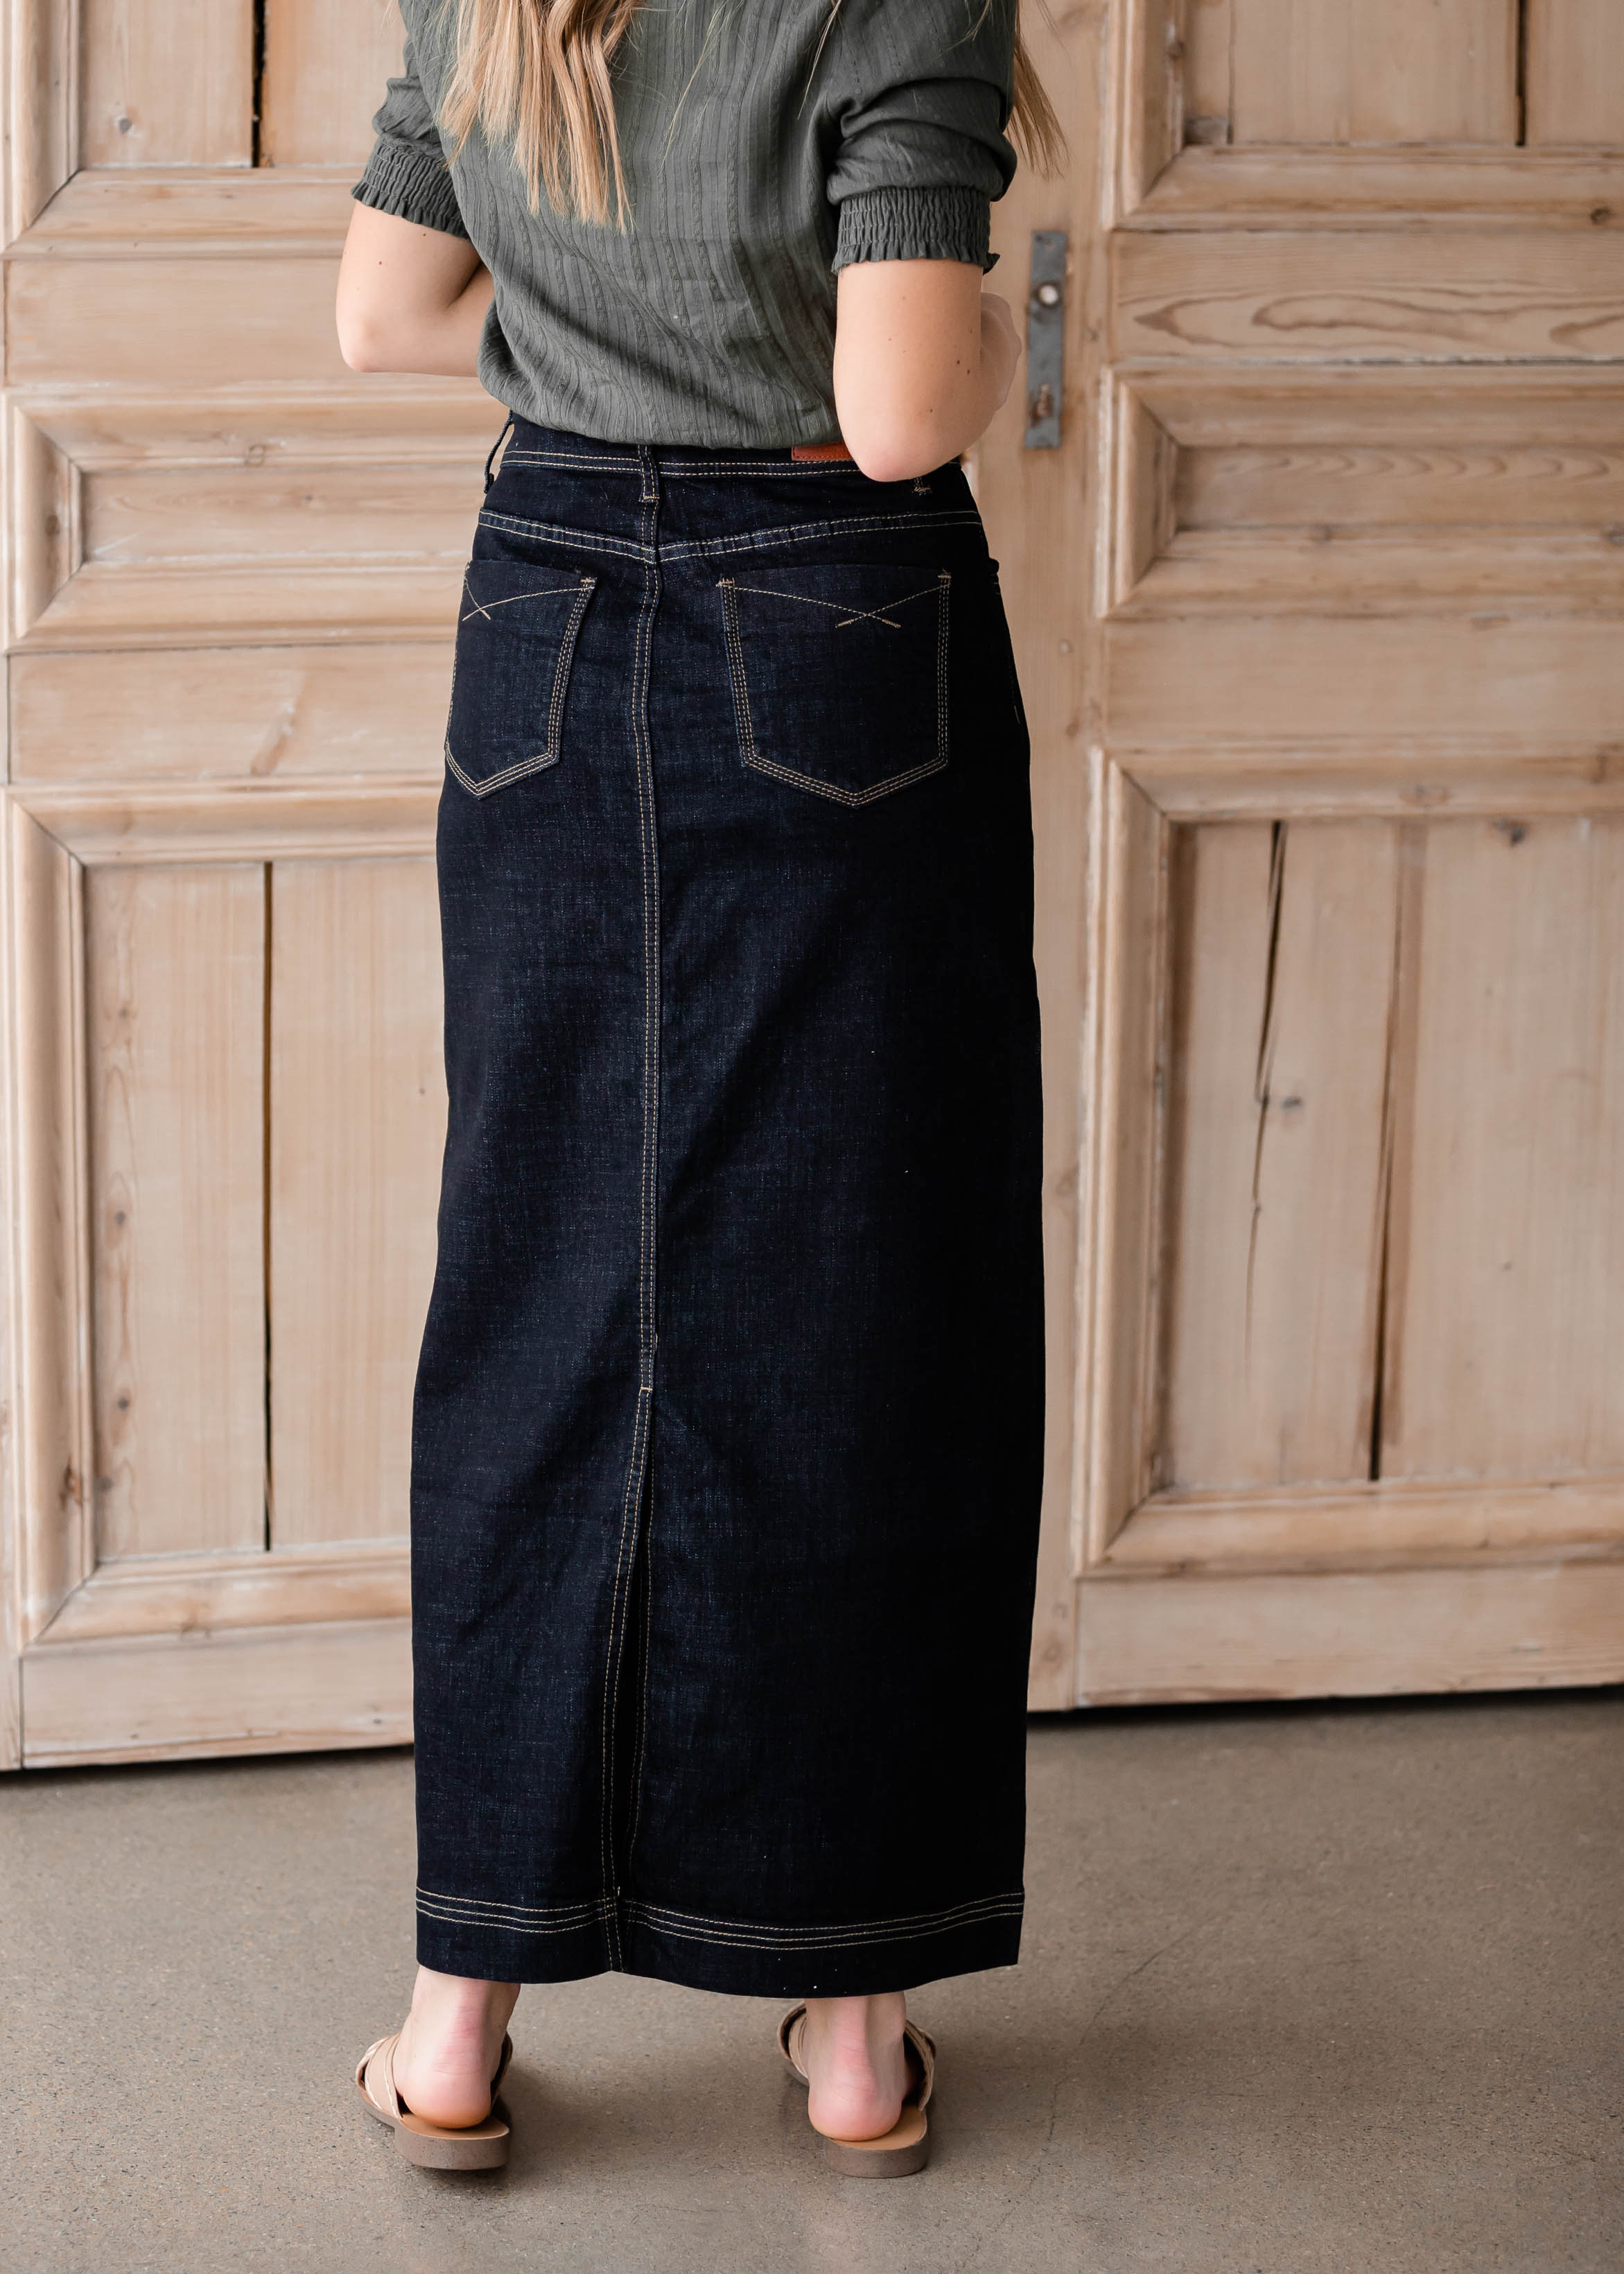 Denim long skirt - Women curated on LTK | Winter skirt outfit, Denim skirt  trend, Stylish spring outfit